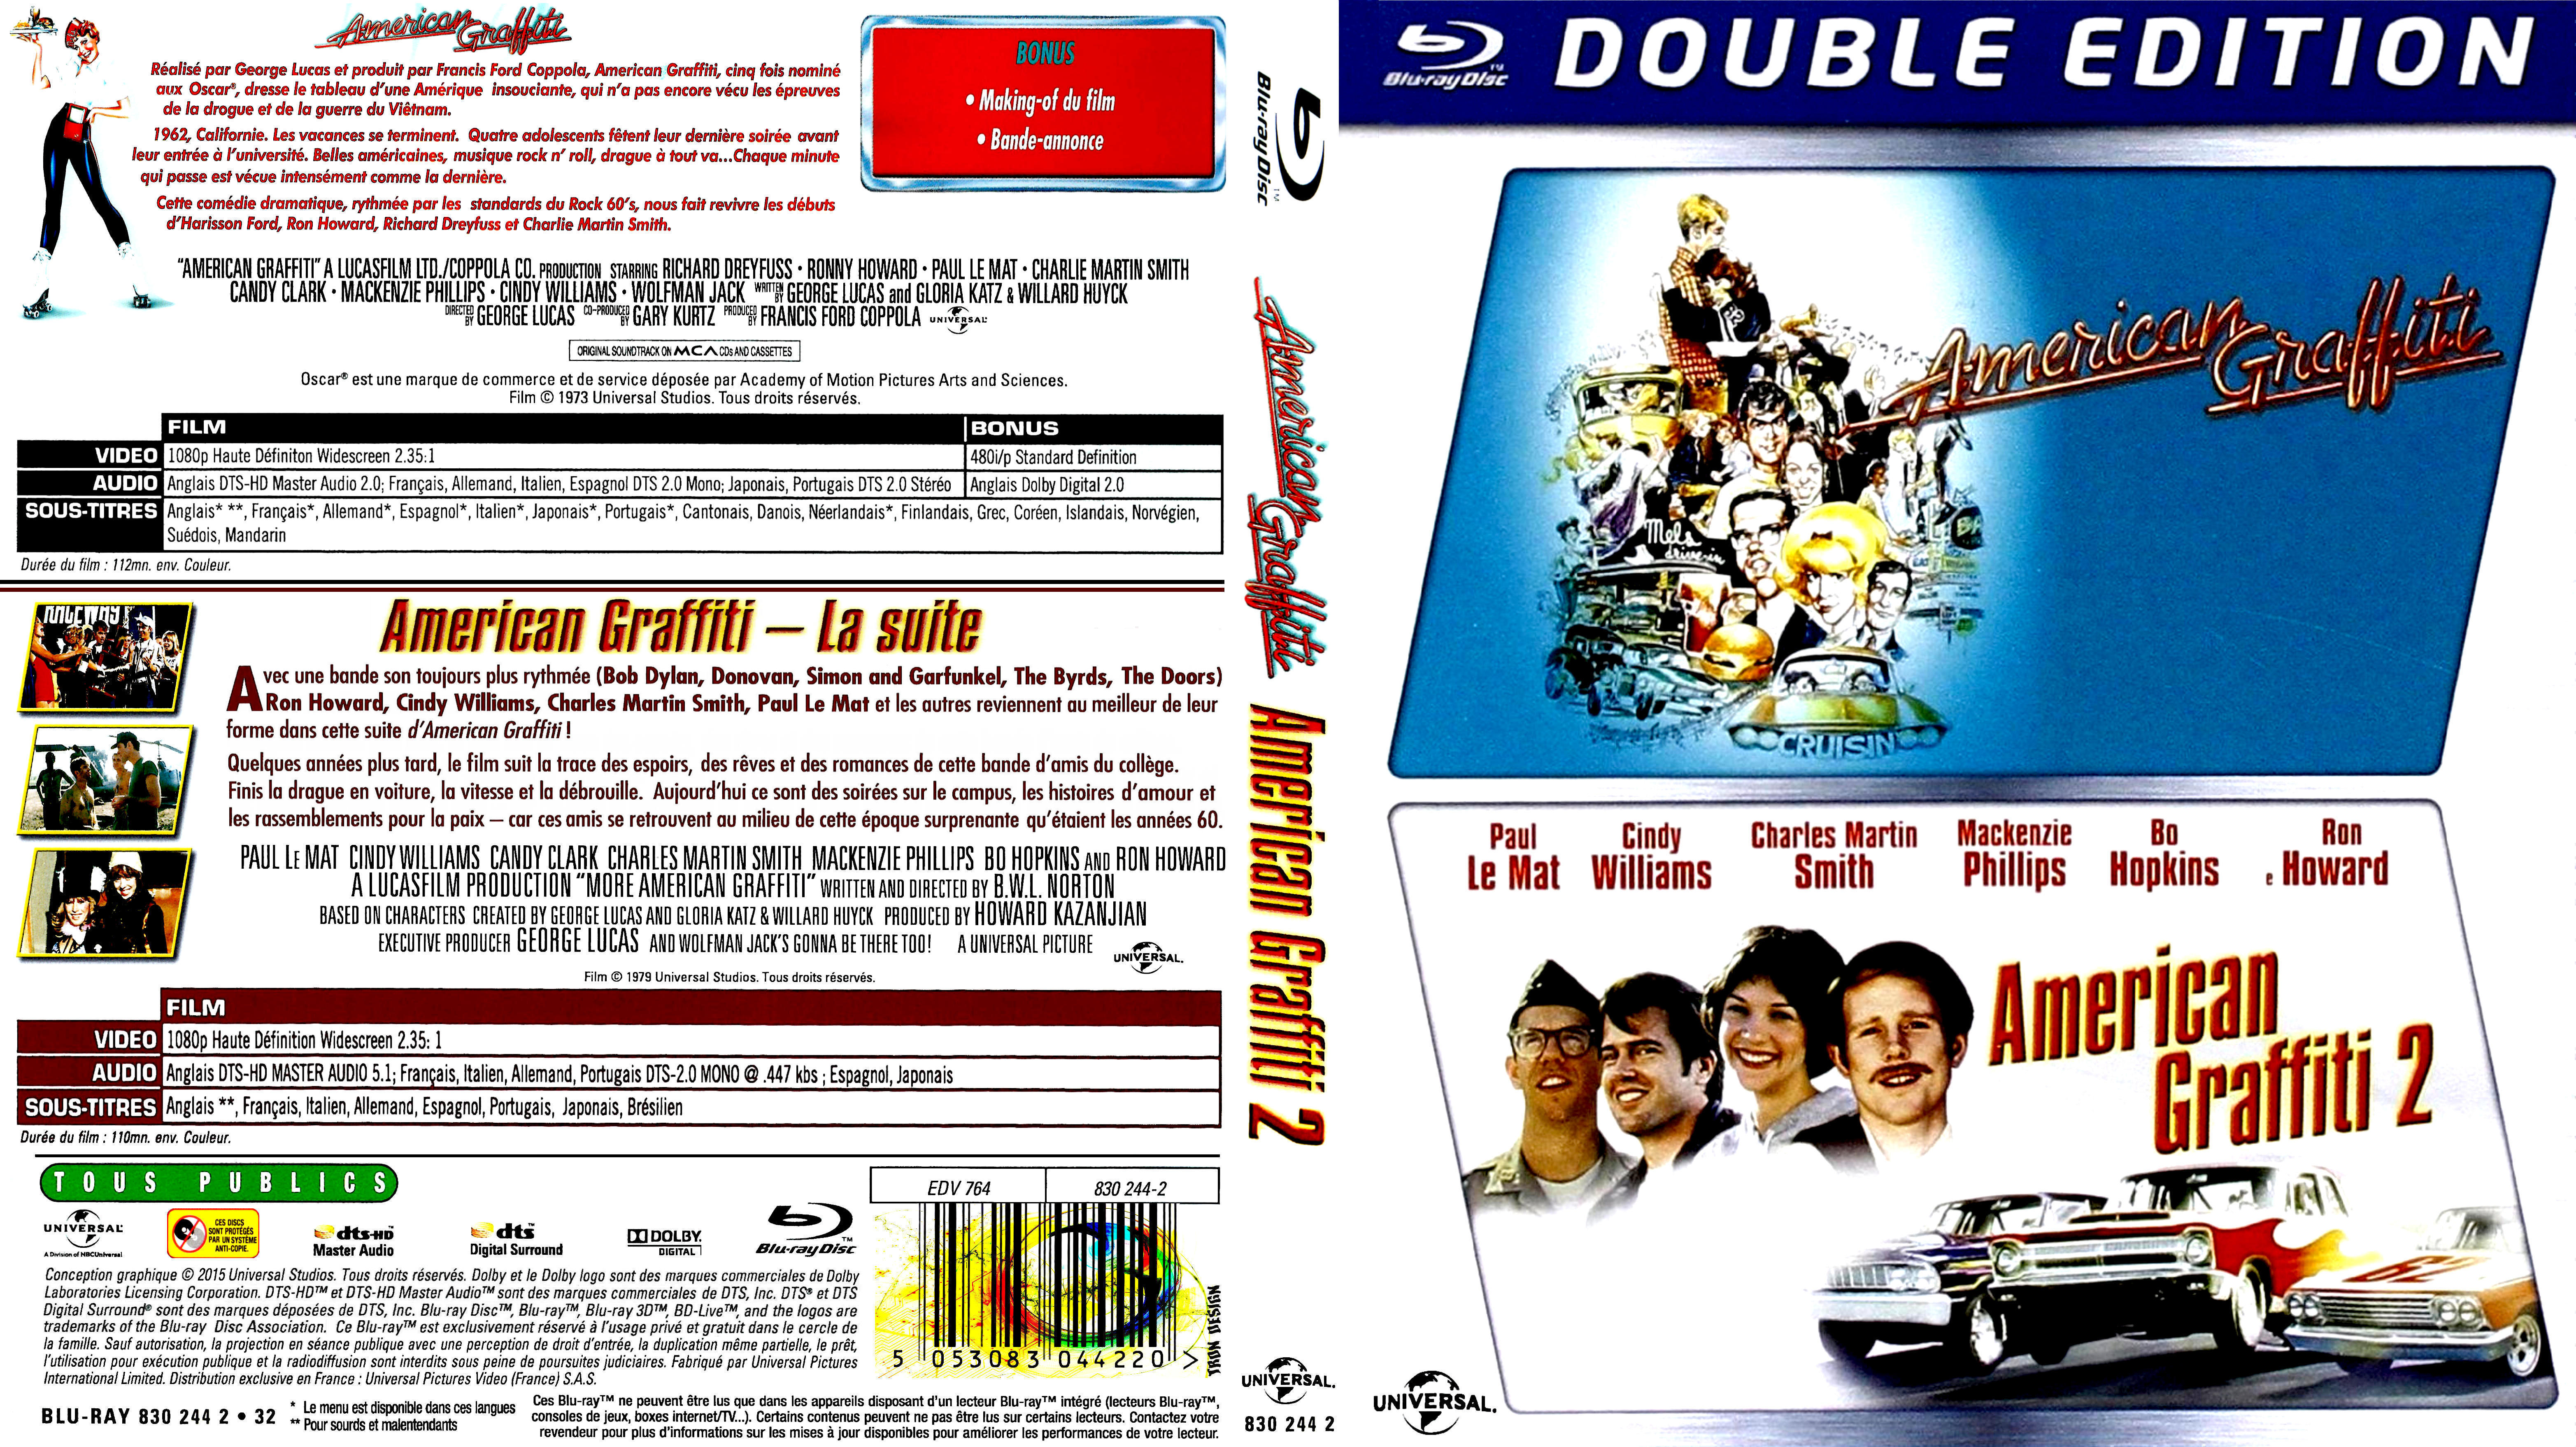 Jaquette DVD American graffiti 1 & 2 custom (BLU-RAY)